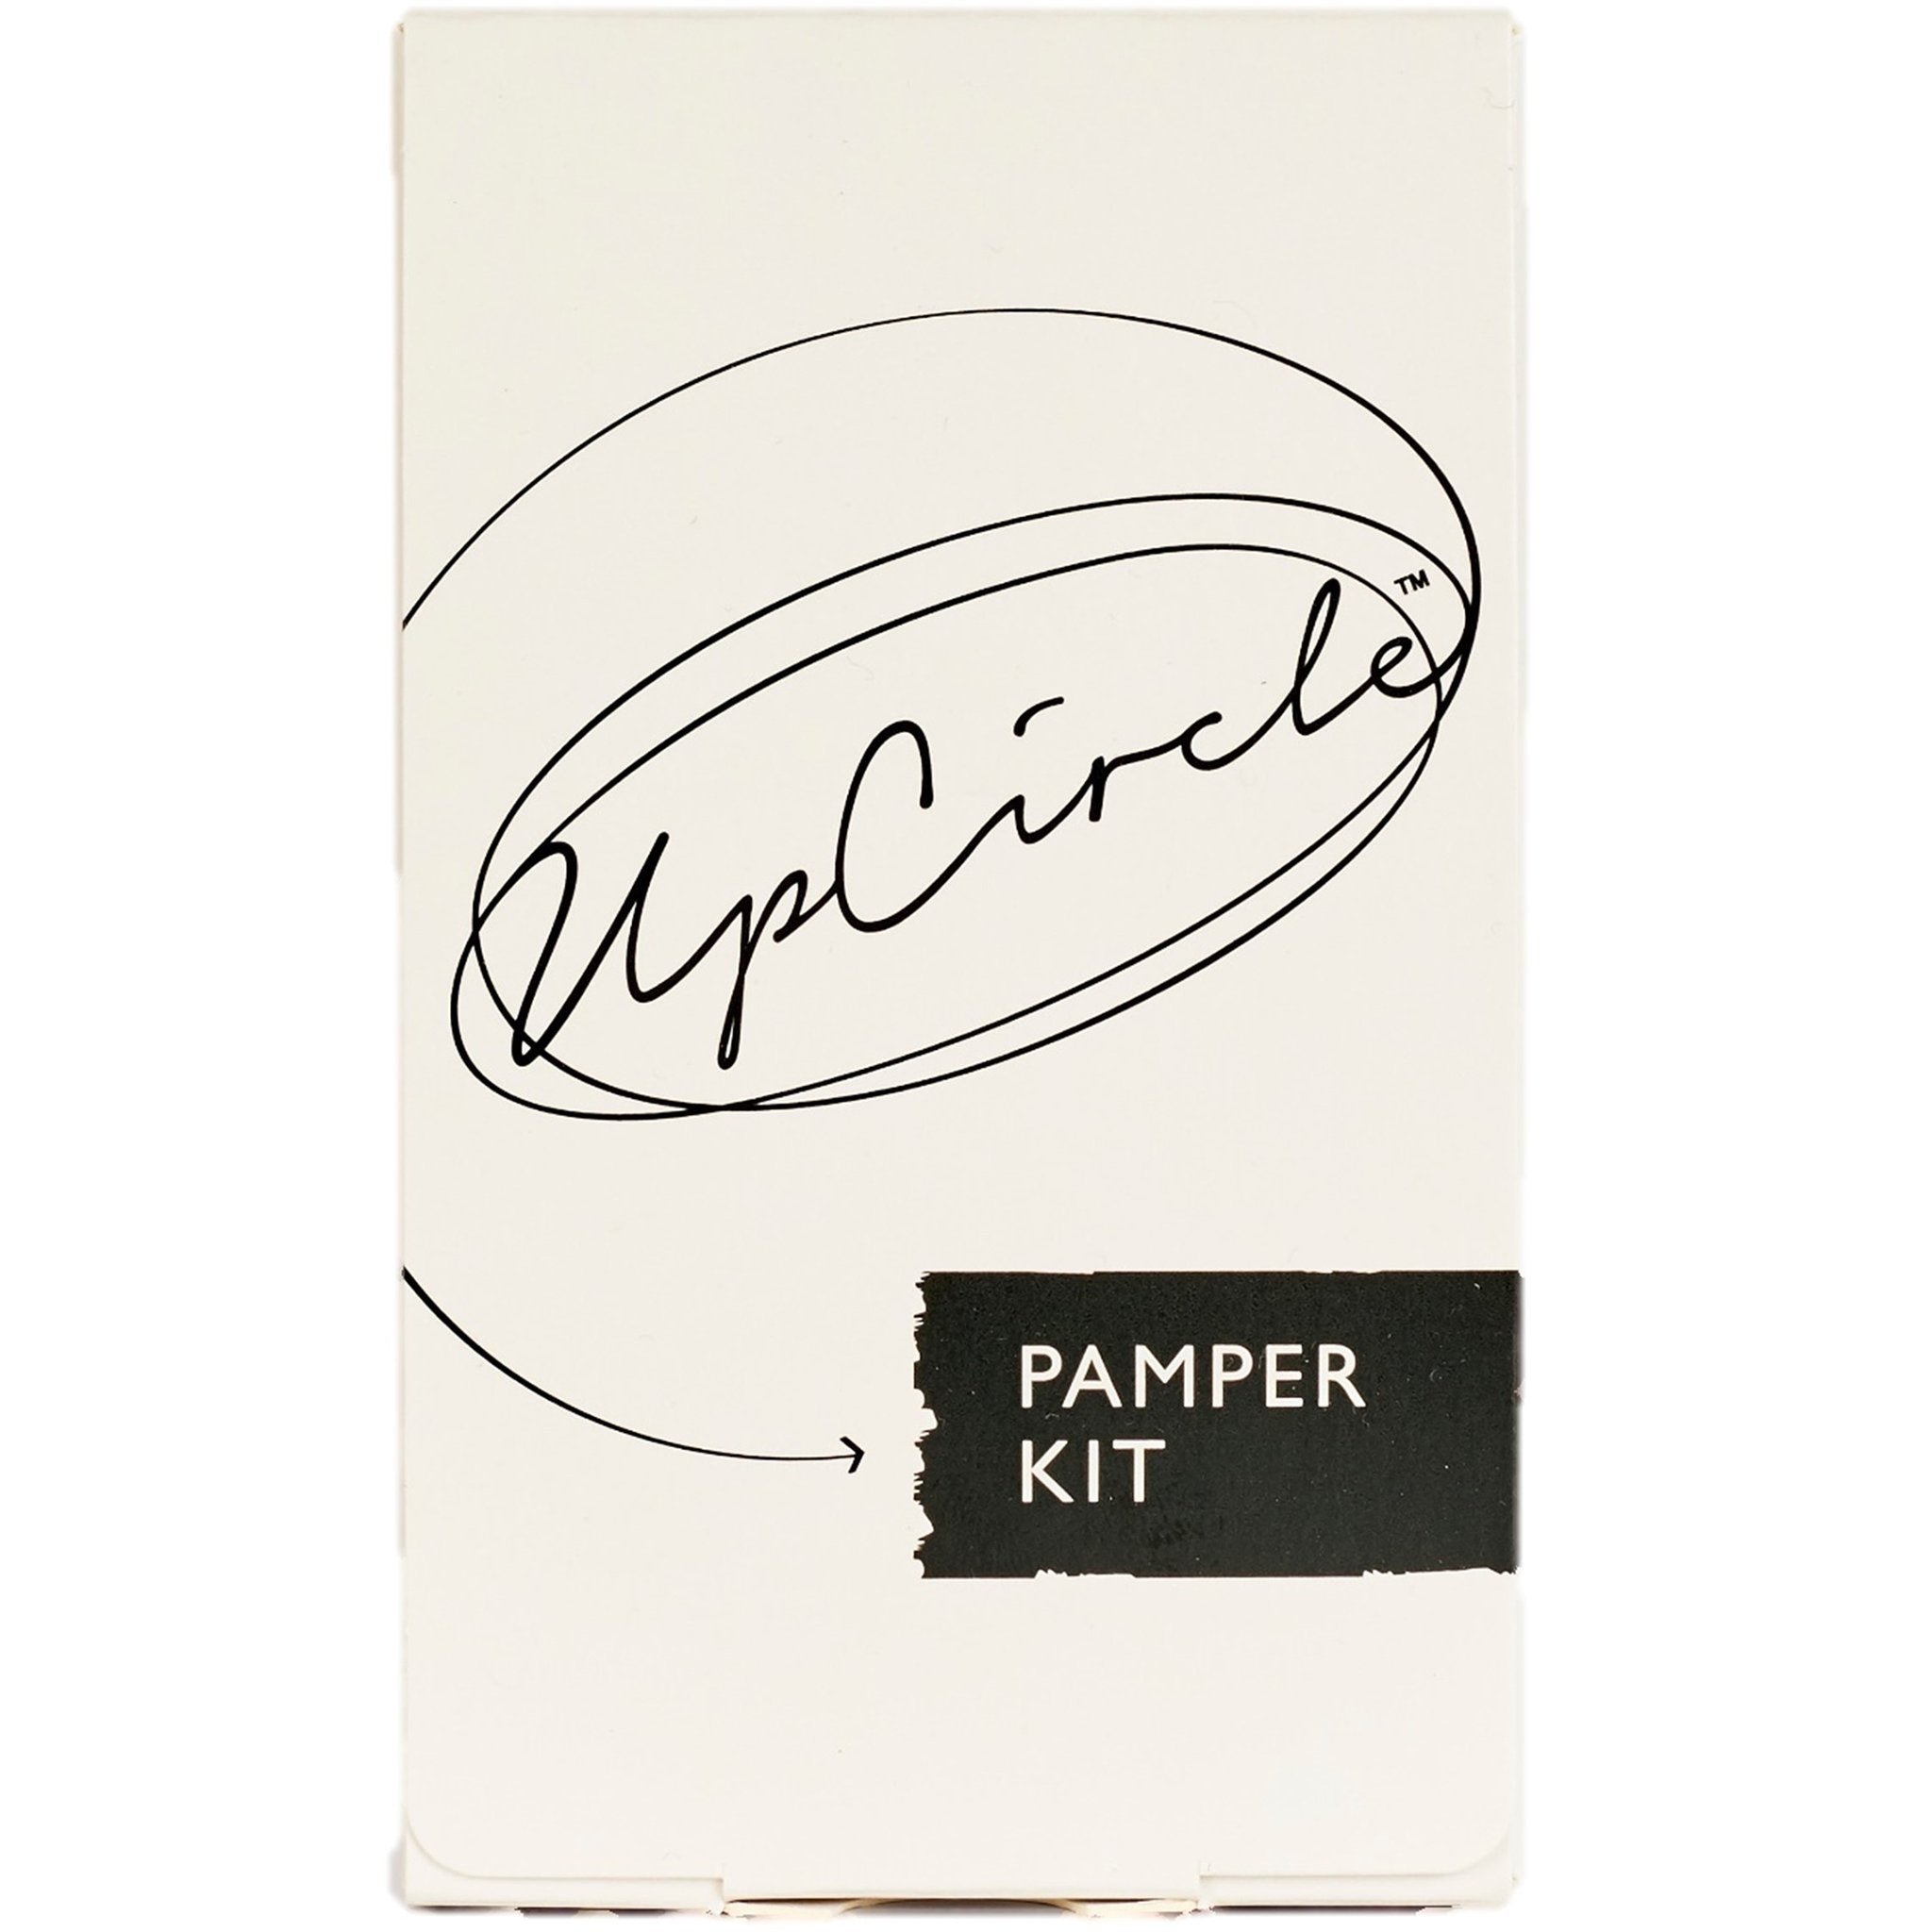 The Pamper Kit - mypure.co.uk